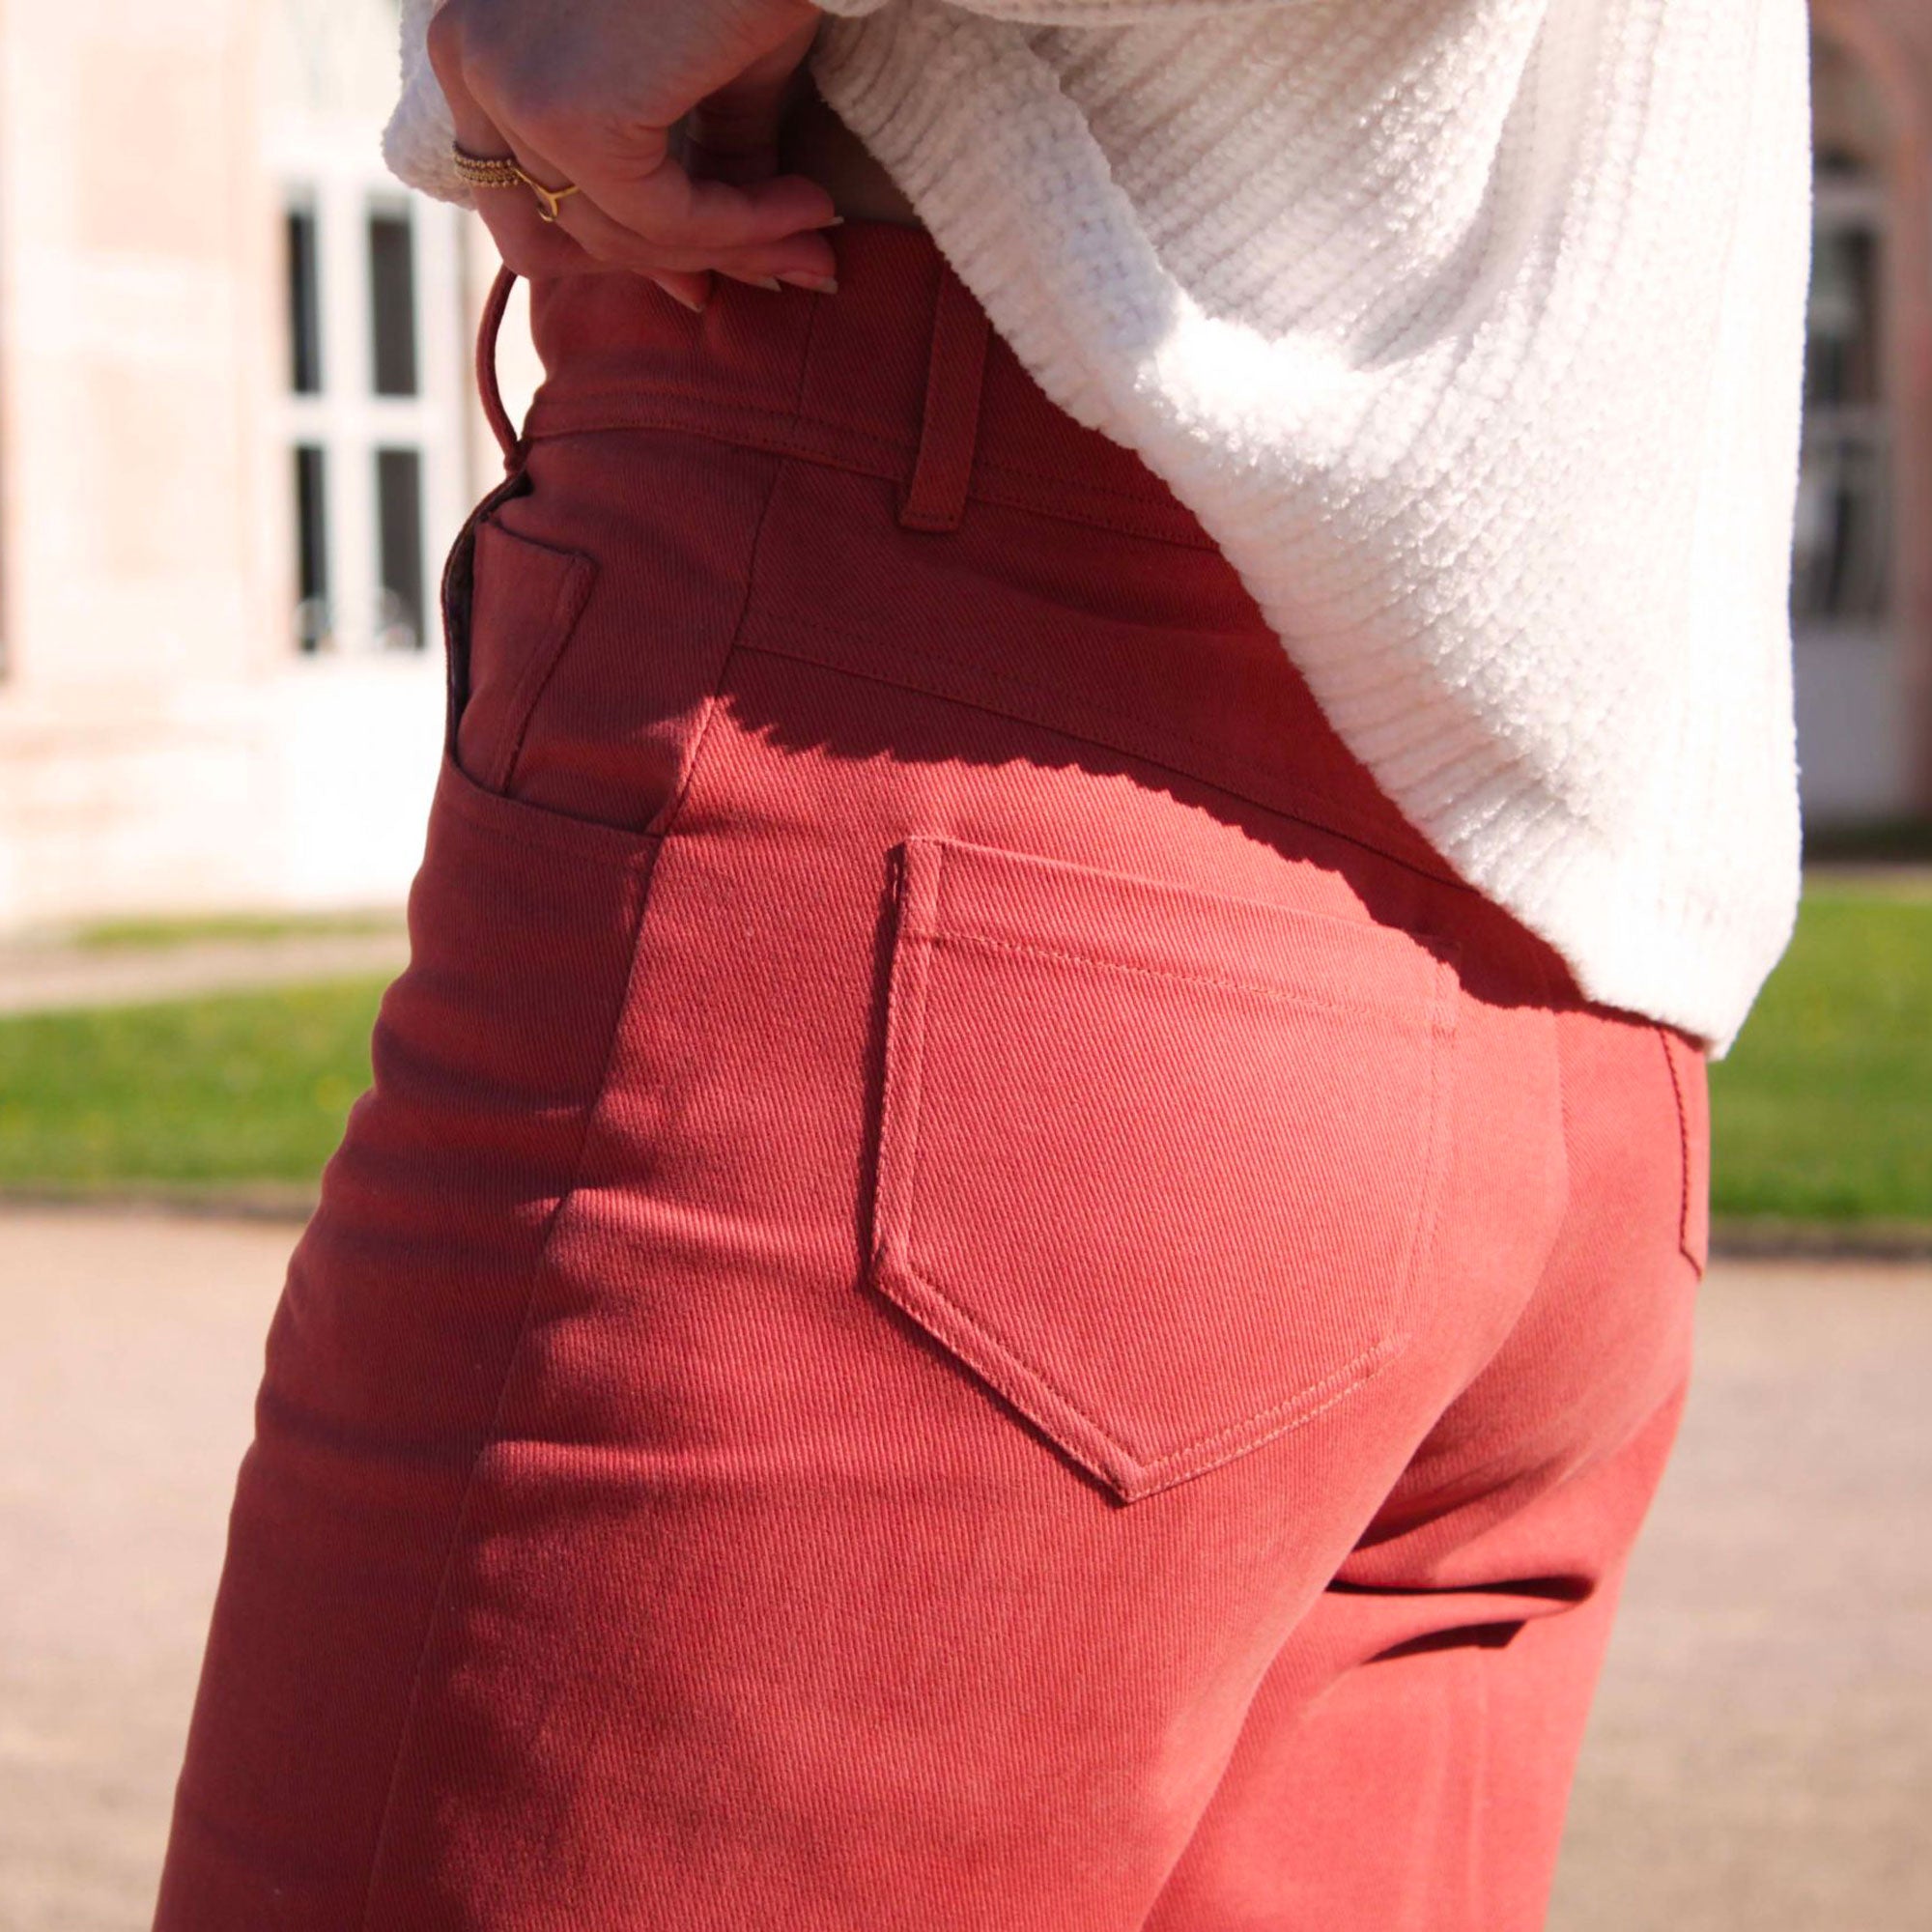 Jade trousers - Pocket sewing pattern 